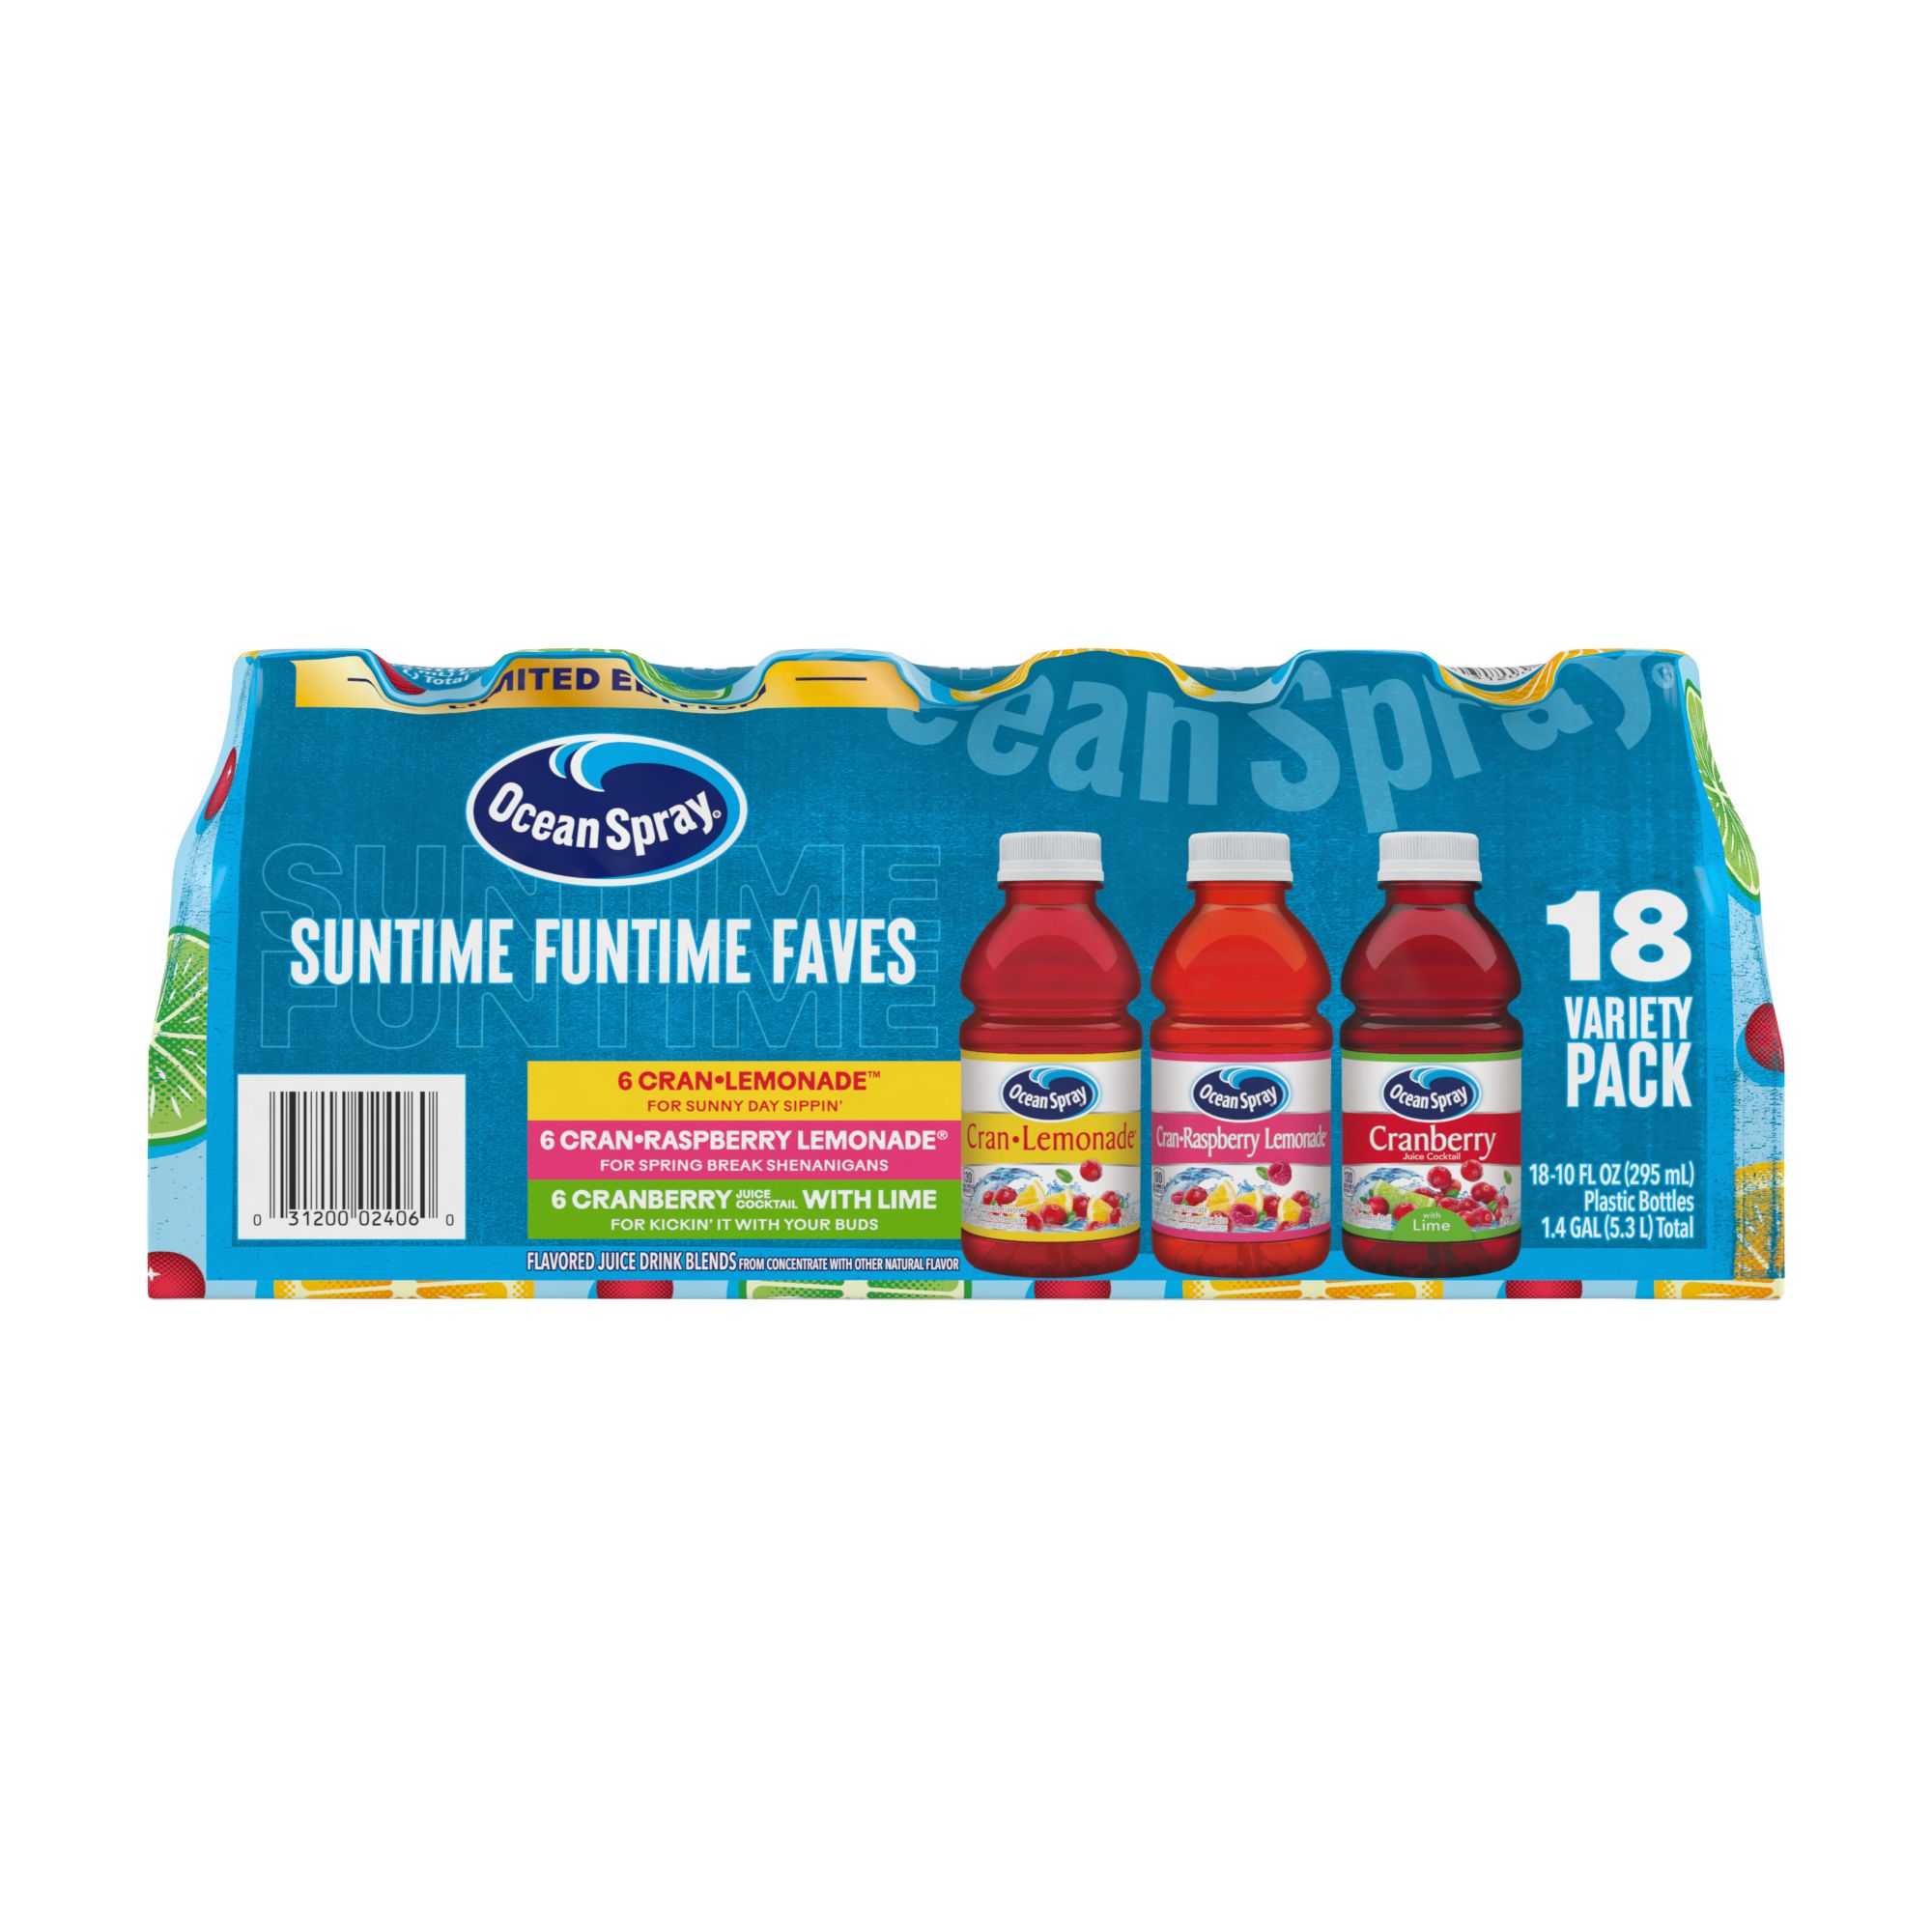 Ocean Spray Suntime Funtime Faves Variety Pack, 18 pk./10 oz.